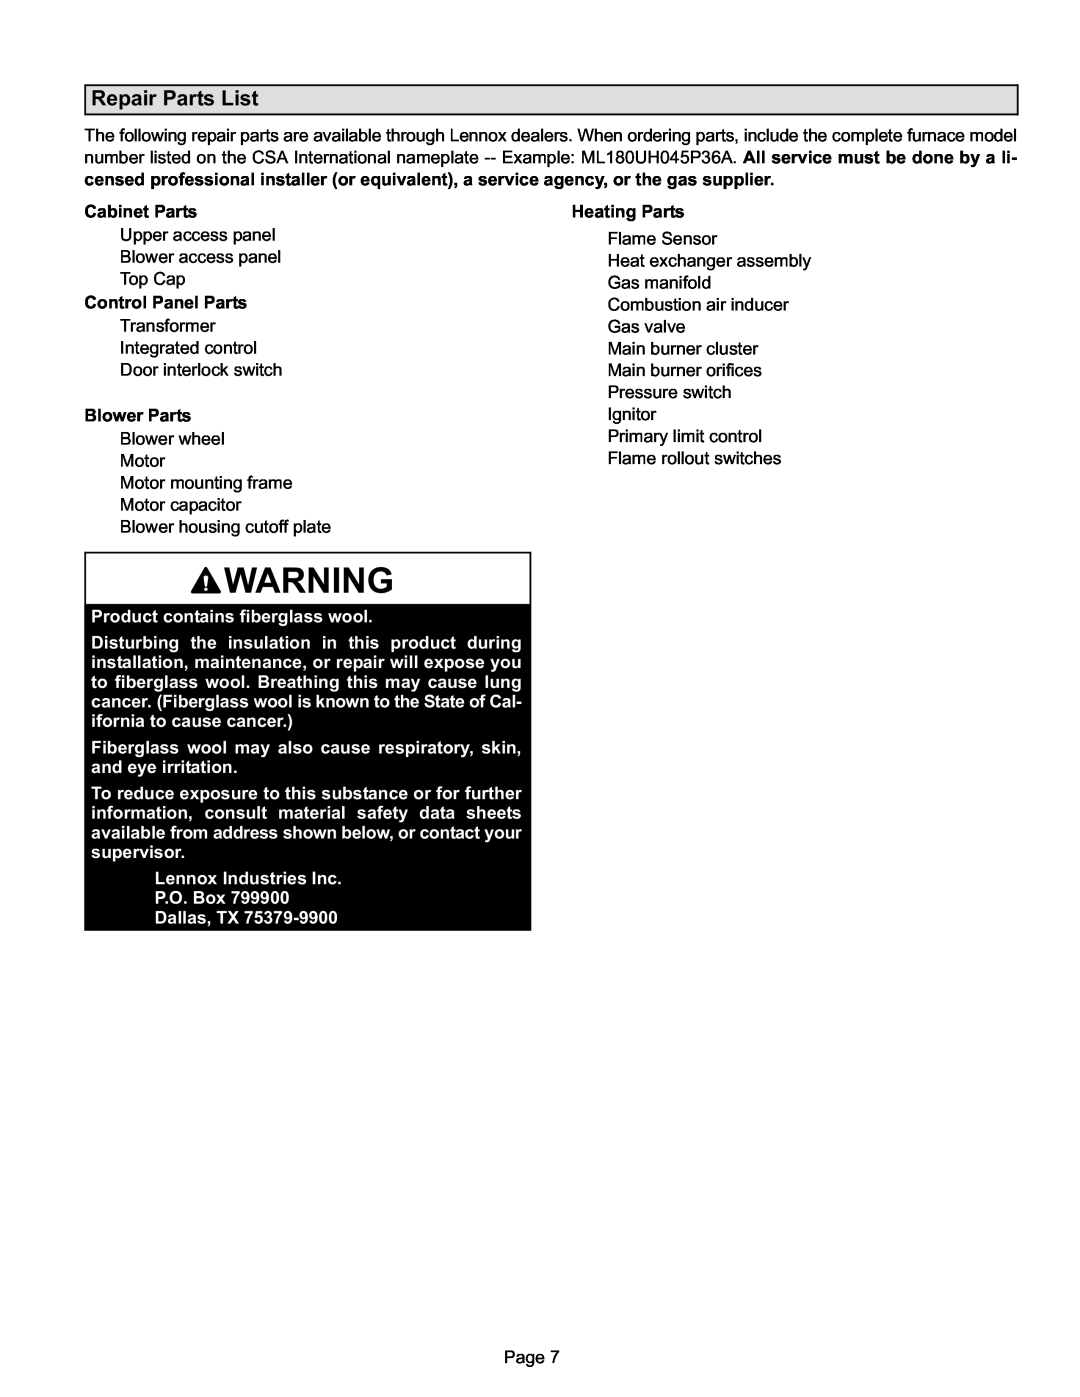 Lennox International Inc LENOX GAS FURNACE, ML180UH manual Repair Parts List 